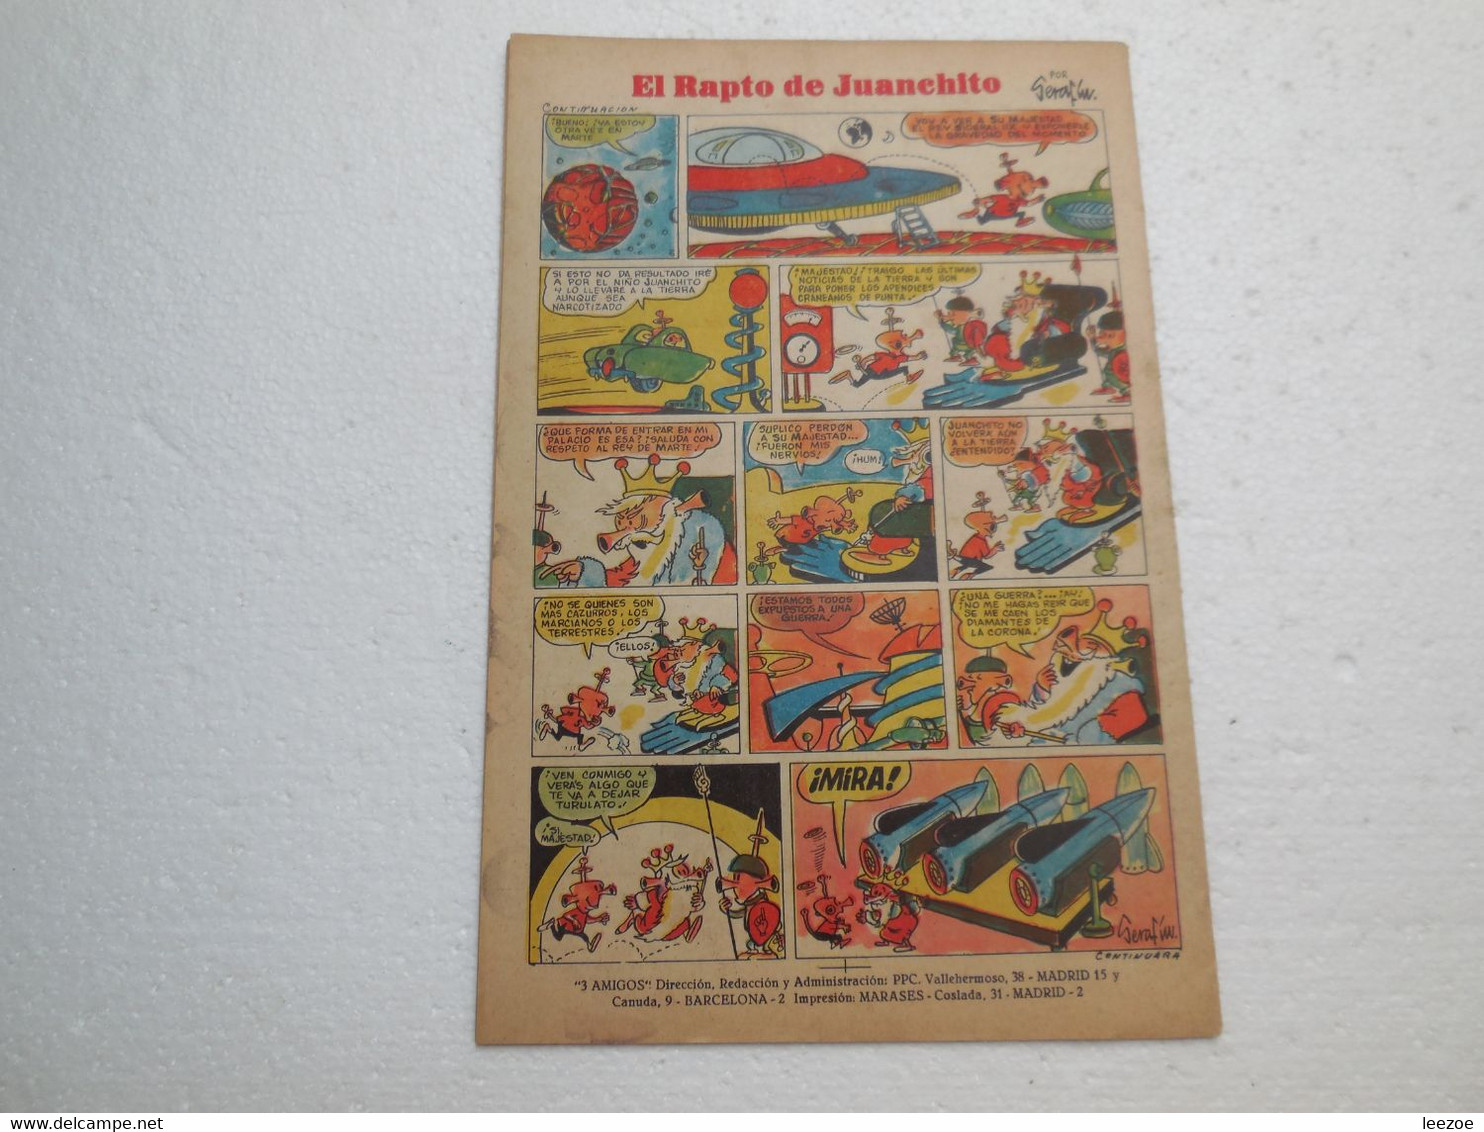 BD 3 AMIGOS 1960 AVEC TINTIN EN ESPAGNOL, Passage De Rackham Le Rouge.....N5.04.02 - Tintin (Kuifje)